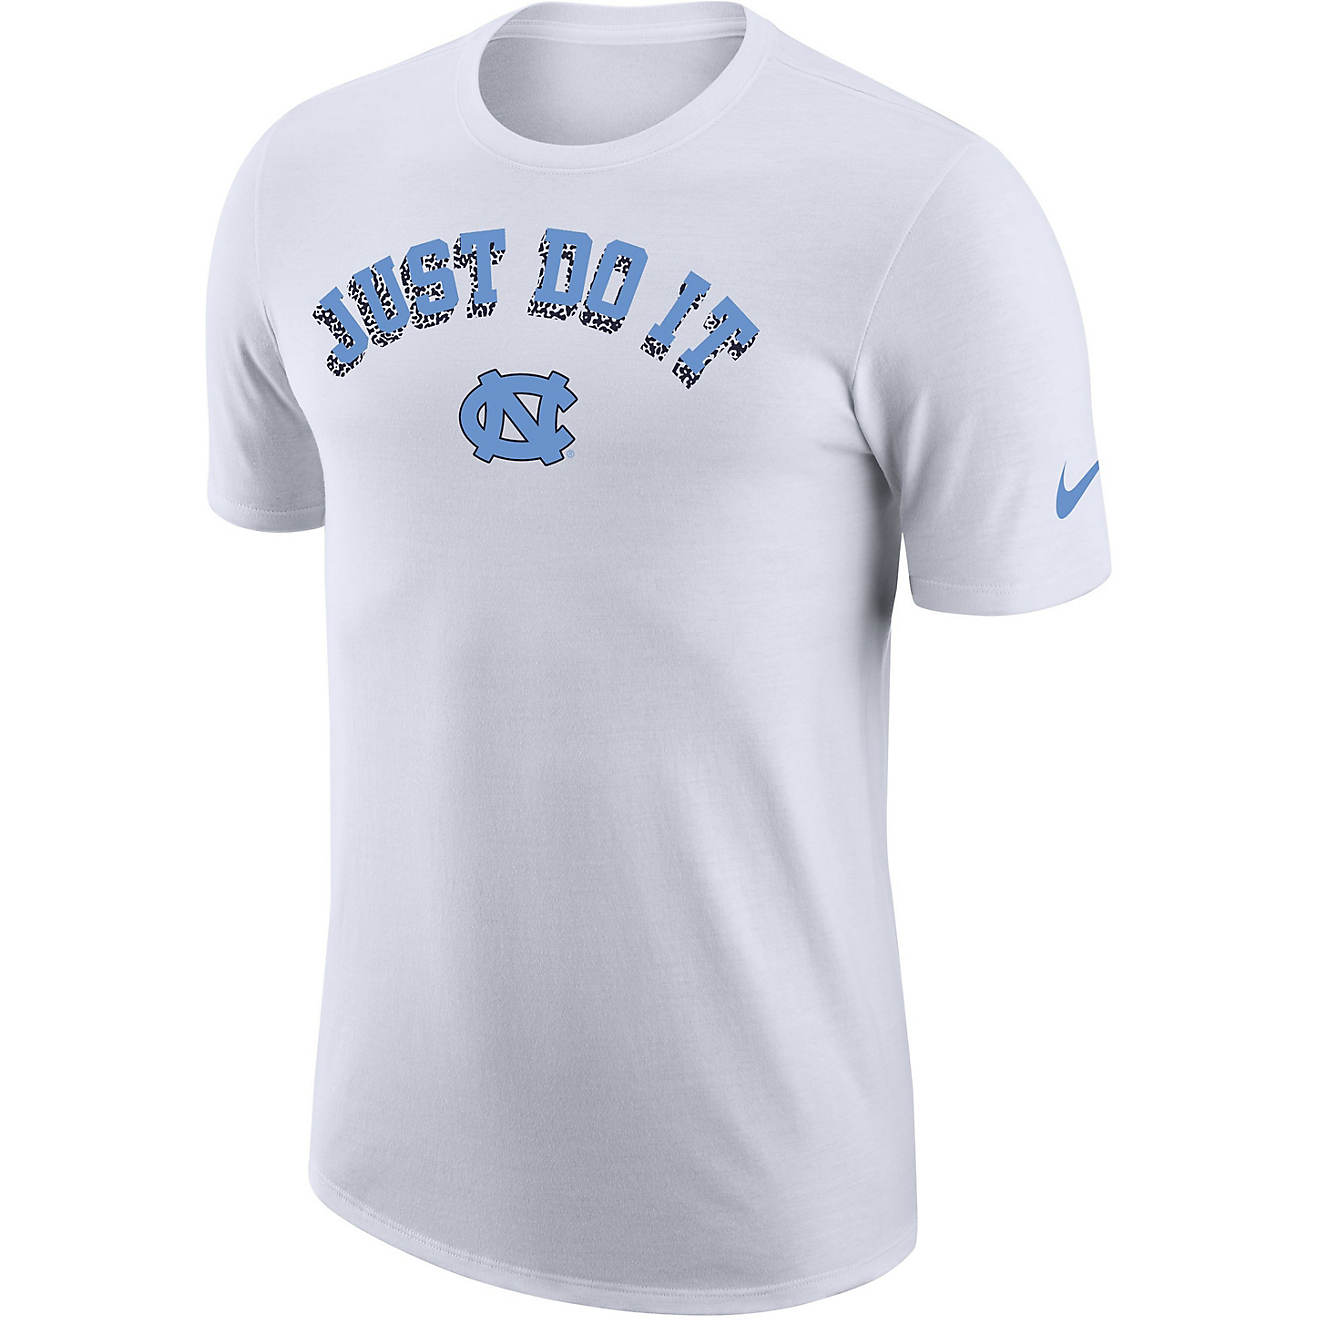 Nike Men's University of North Carolina Just Do It Graphic T-shirt ...